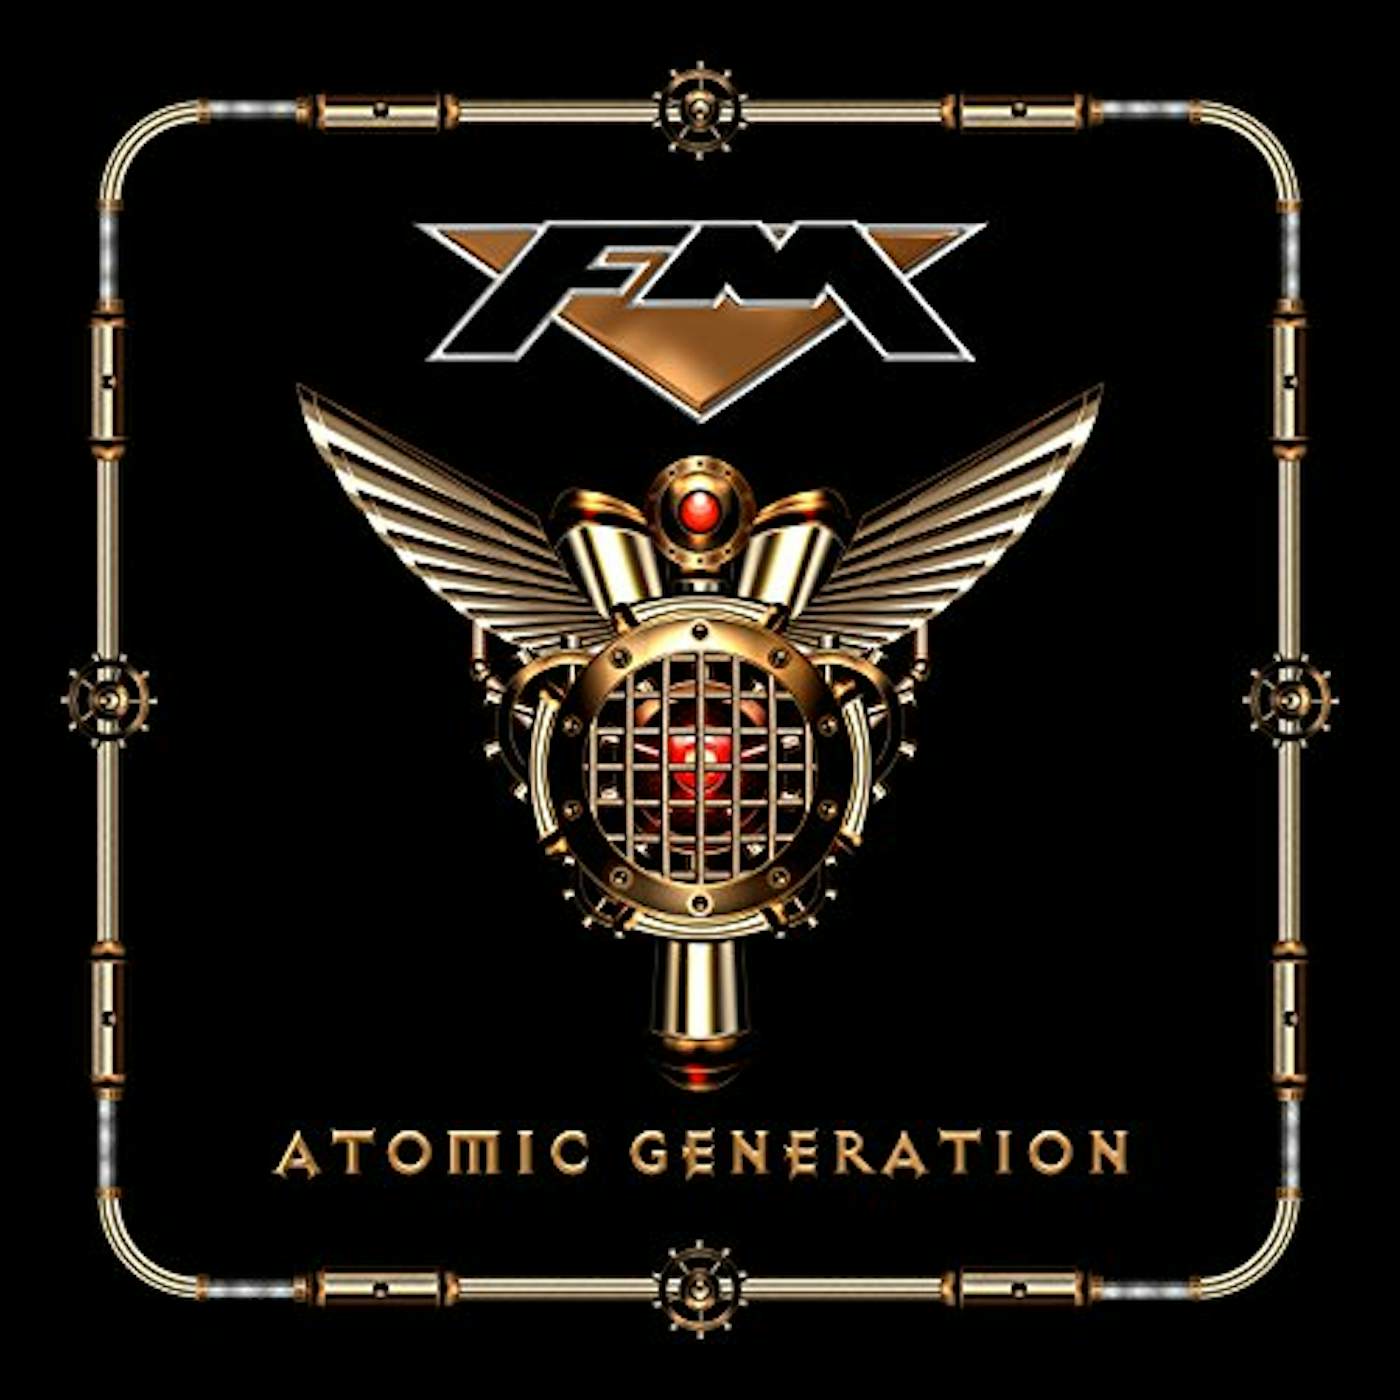 FM ATOMIC GENERATION CD